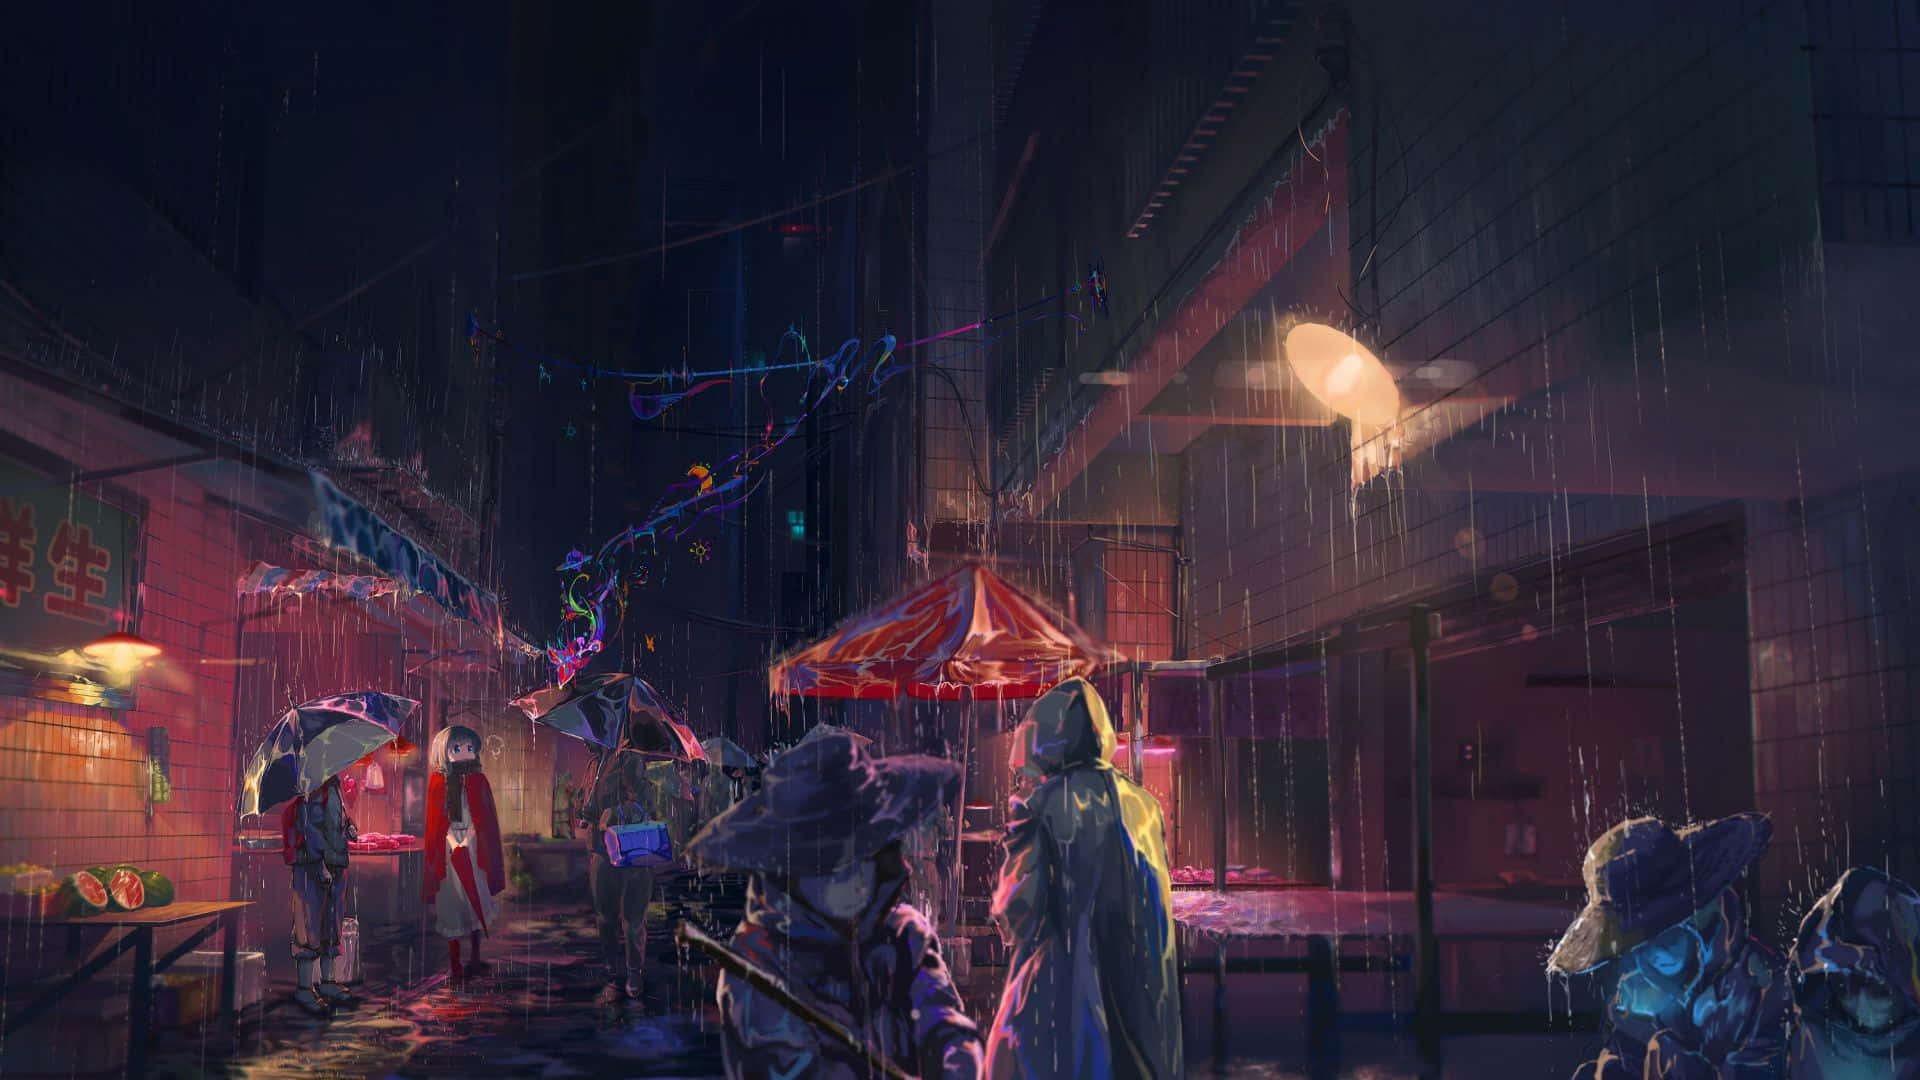 A Dark Street Scene With People Walking In The Rain